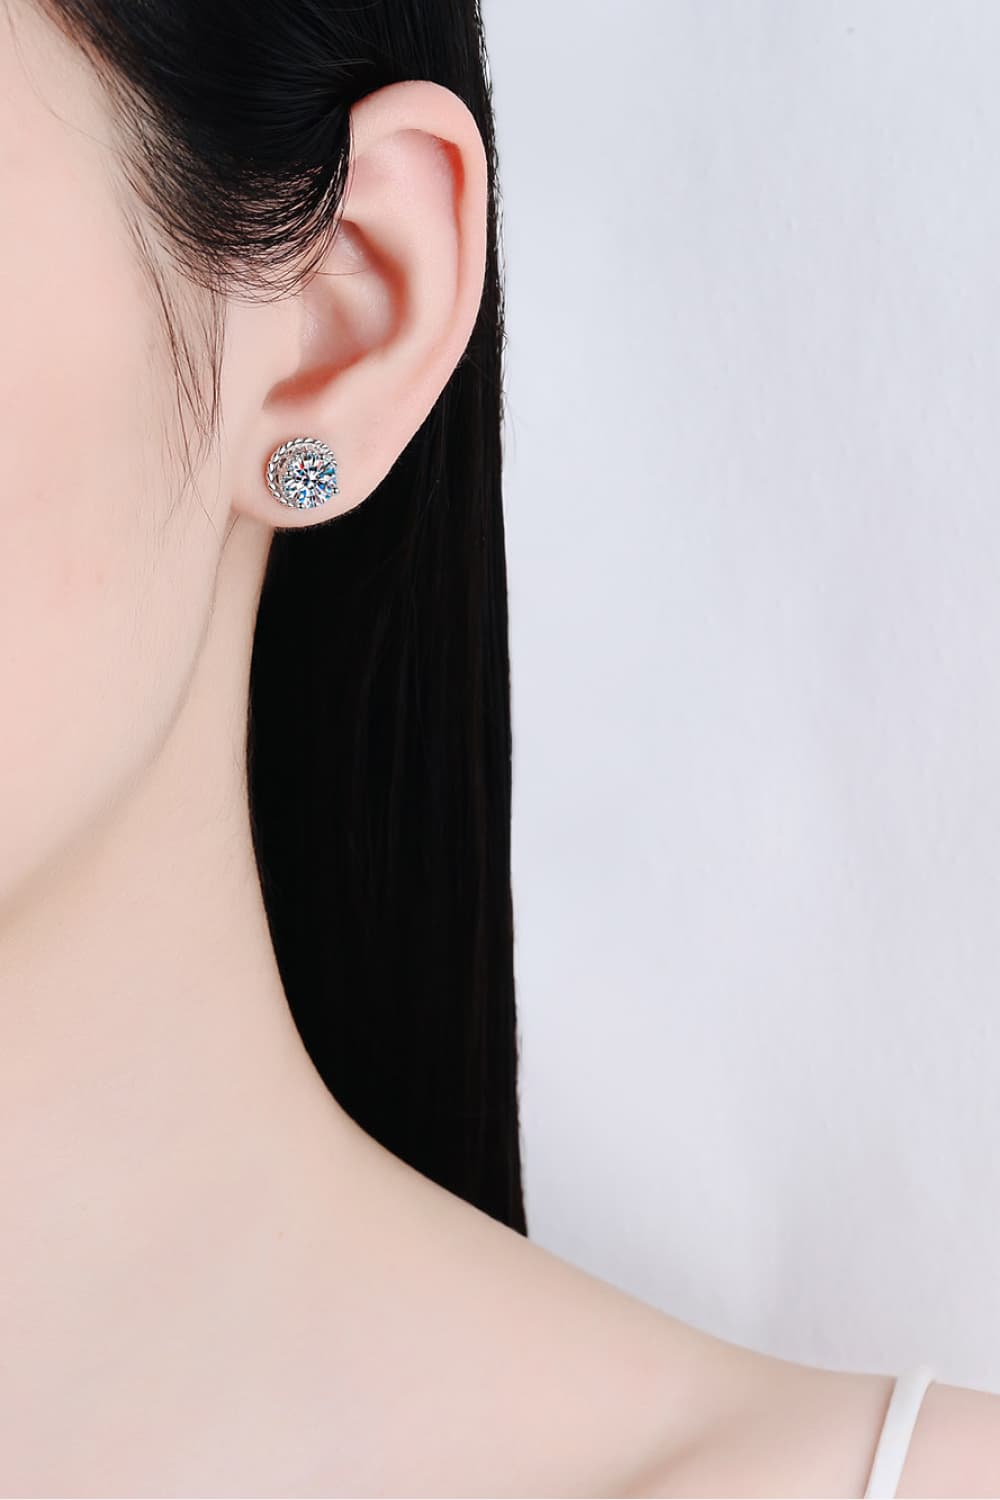 2 Ct Moissanite 925 Sterling Silver Stud Earrings